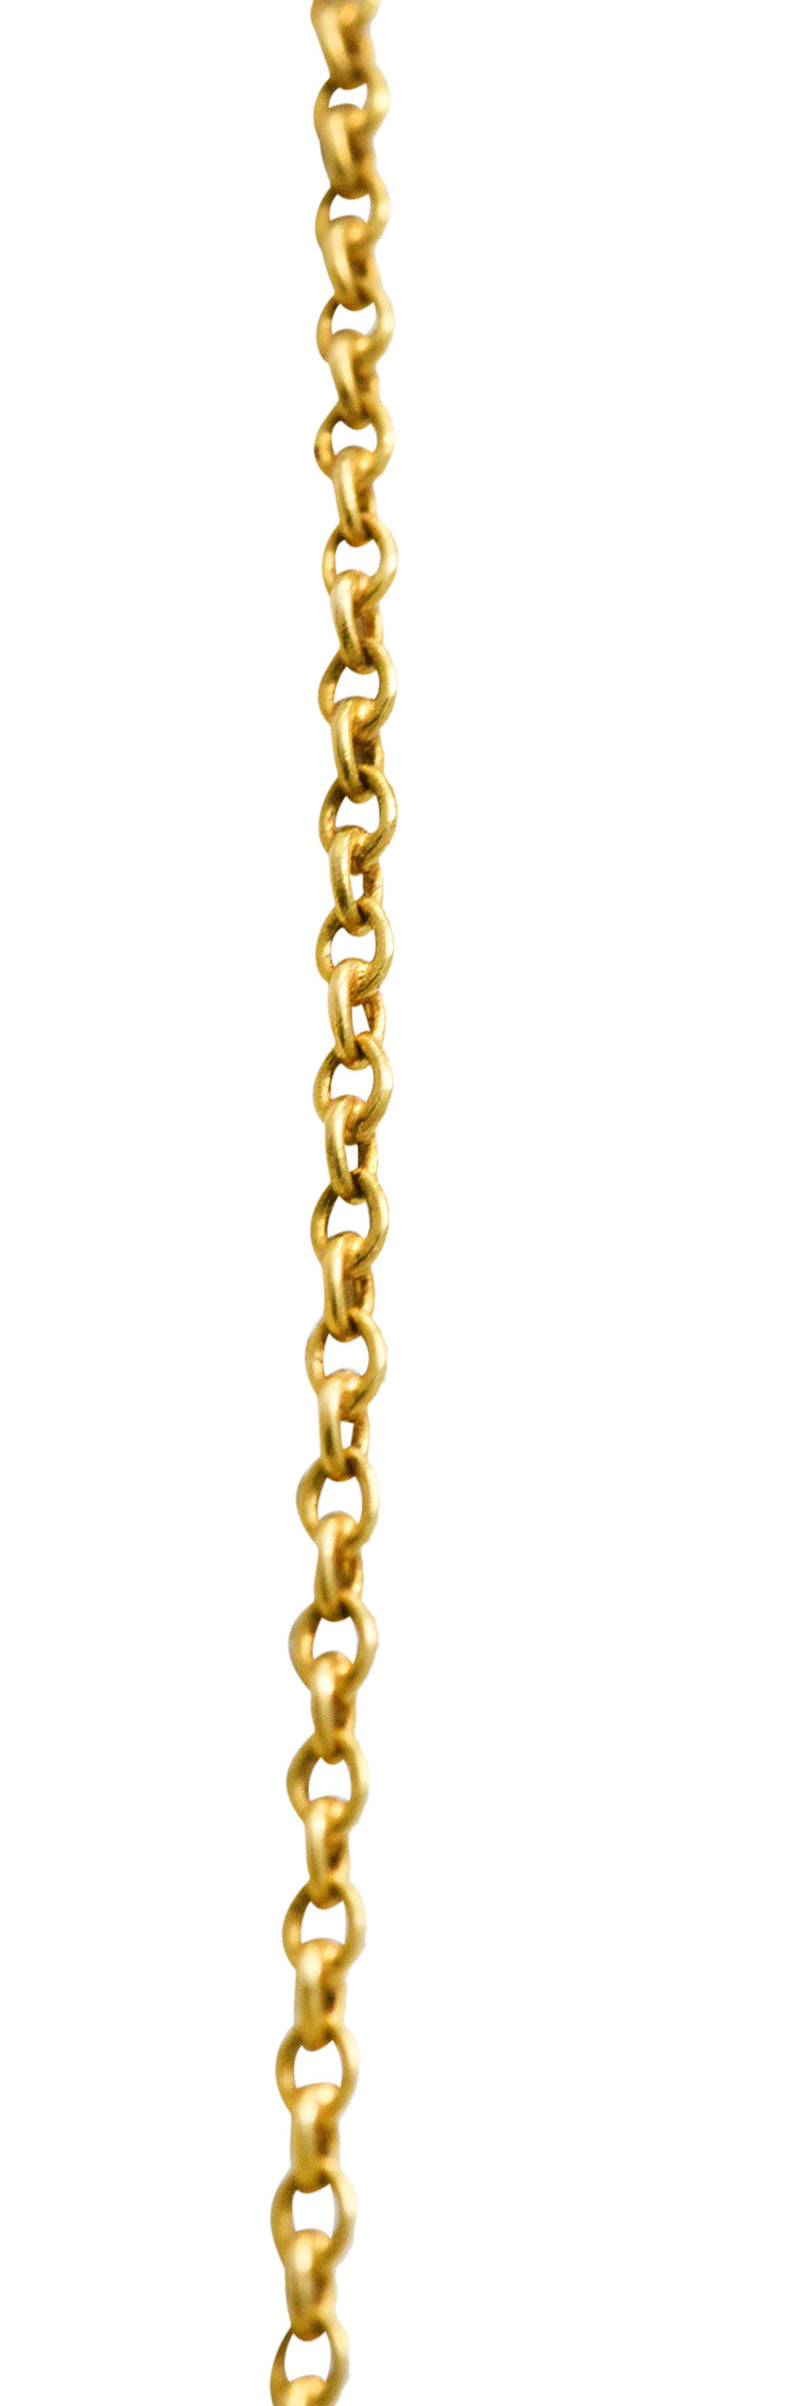 Art Nouveau Sapphire Pearl 18 Karat Gold Flower Blossom Station NecklaceNecklace - Wilson's Estate Jewelry